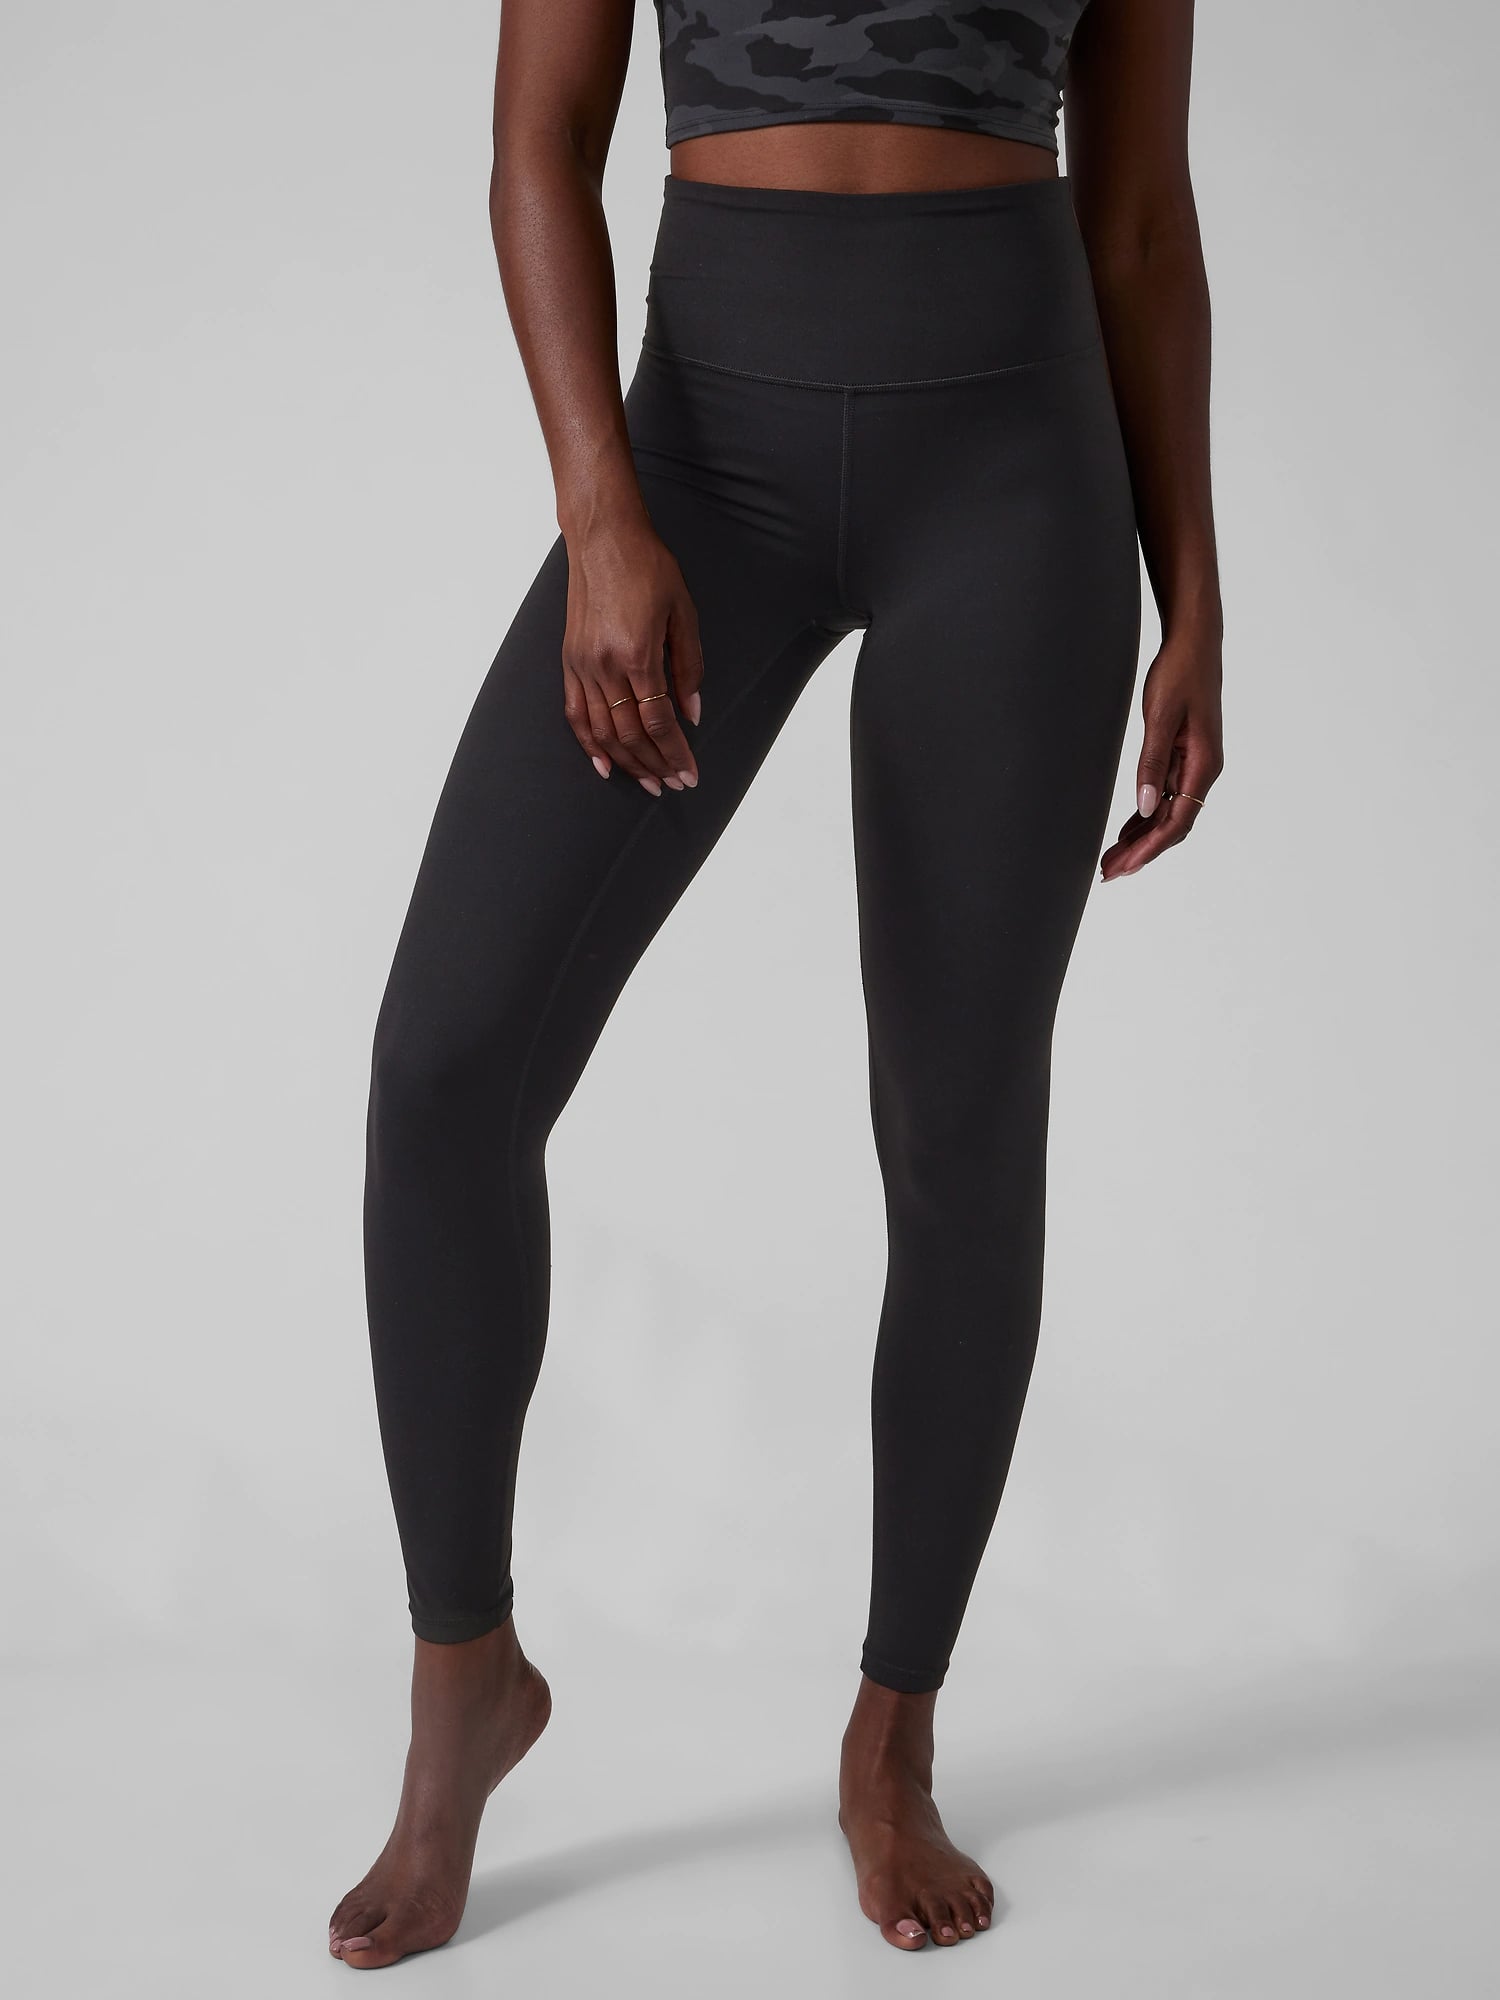 Athleta Medium Athleisure Leggings-Yoga Black/White Spots Pockets Gym Womens  EUC - $23 - From Todd